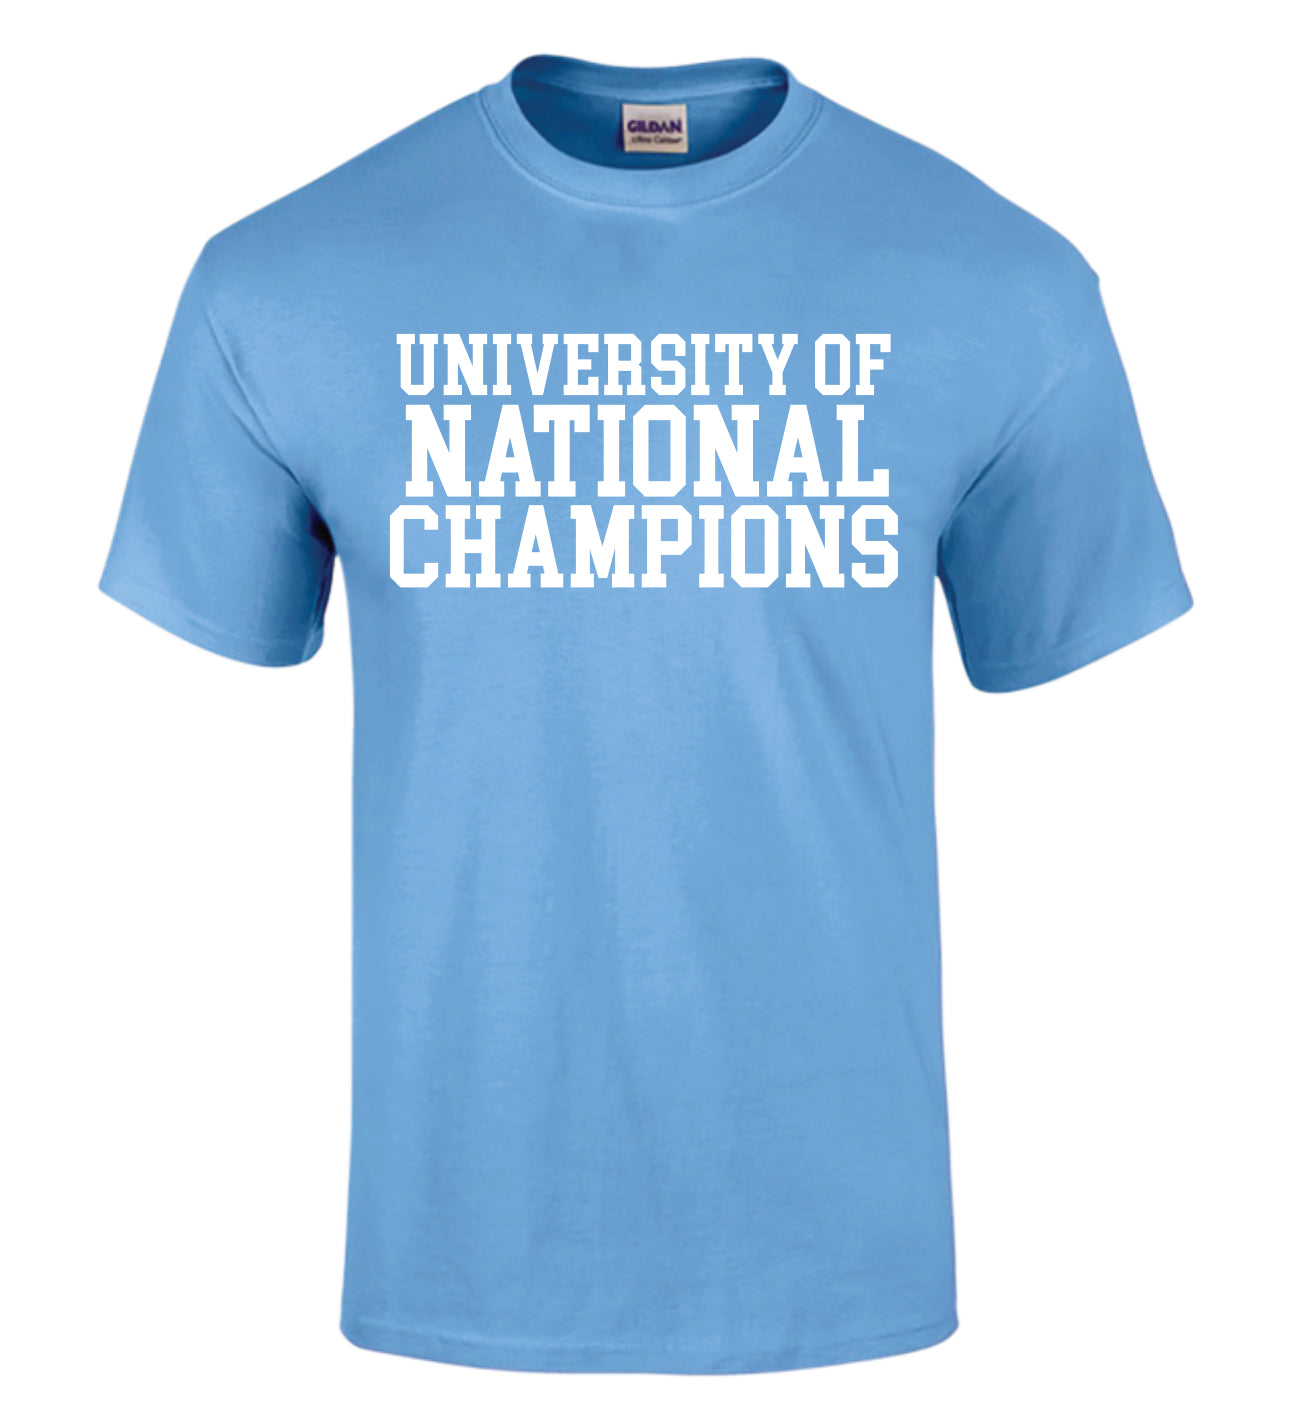 University of National Champions T-Shirt Classic by Shrunken Head 2x